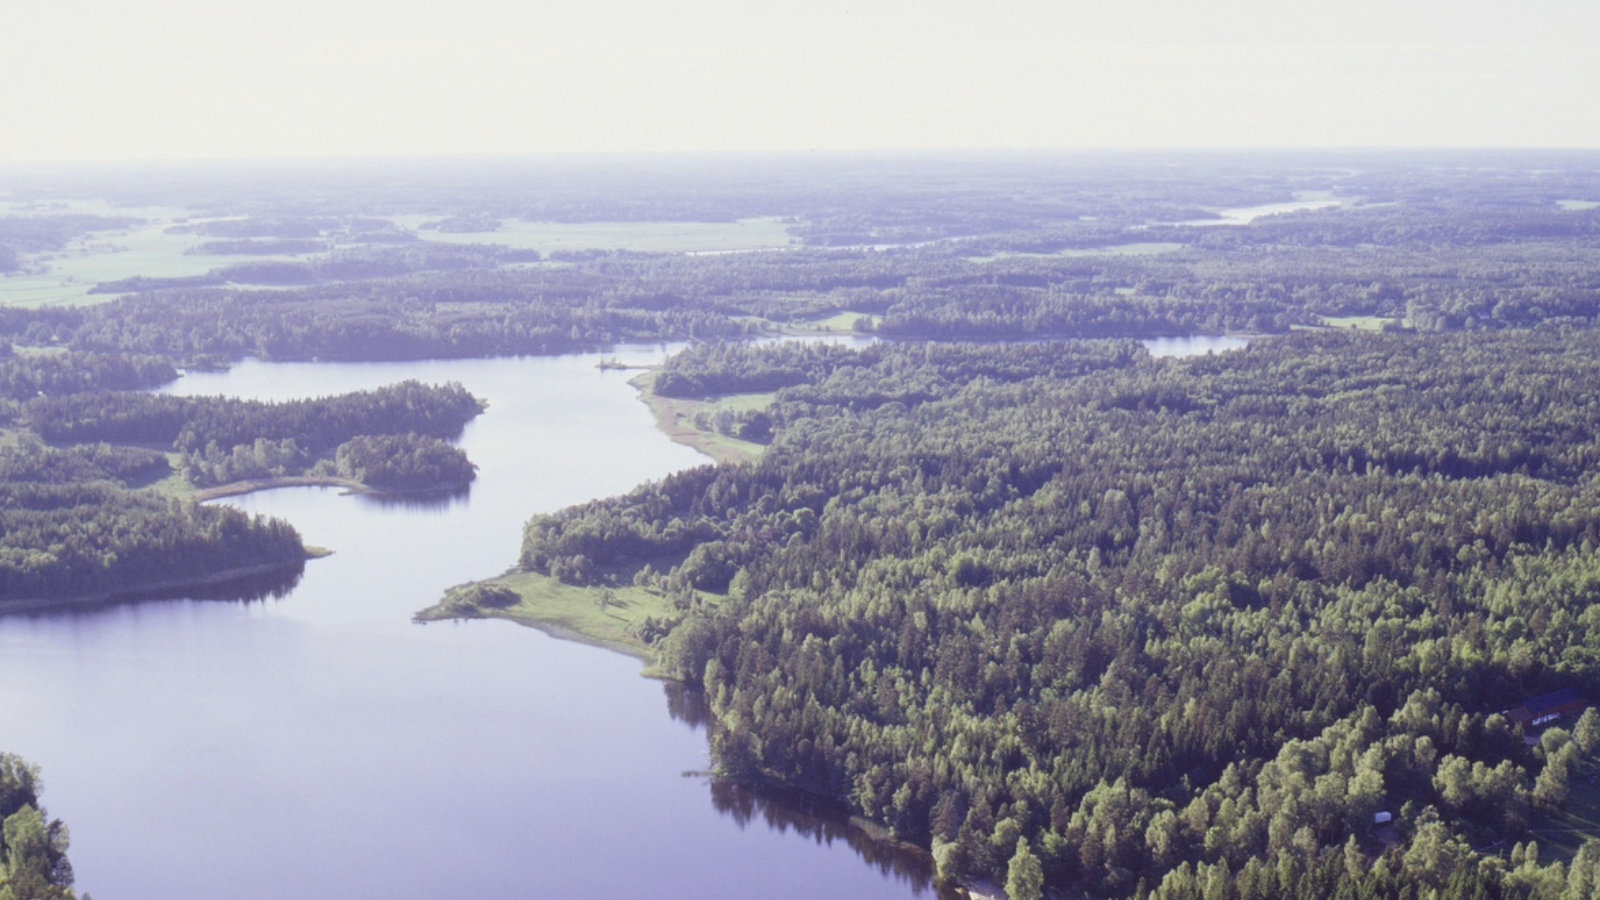 Race Through Paradise: The 6 Lakes Marathon—A Swedish Stunning Trail
Adventure